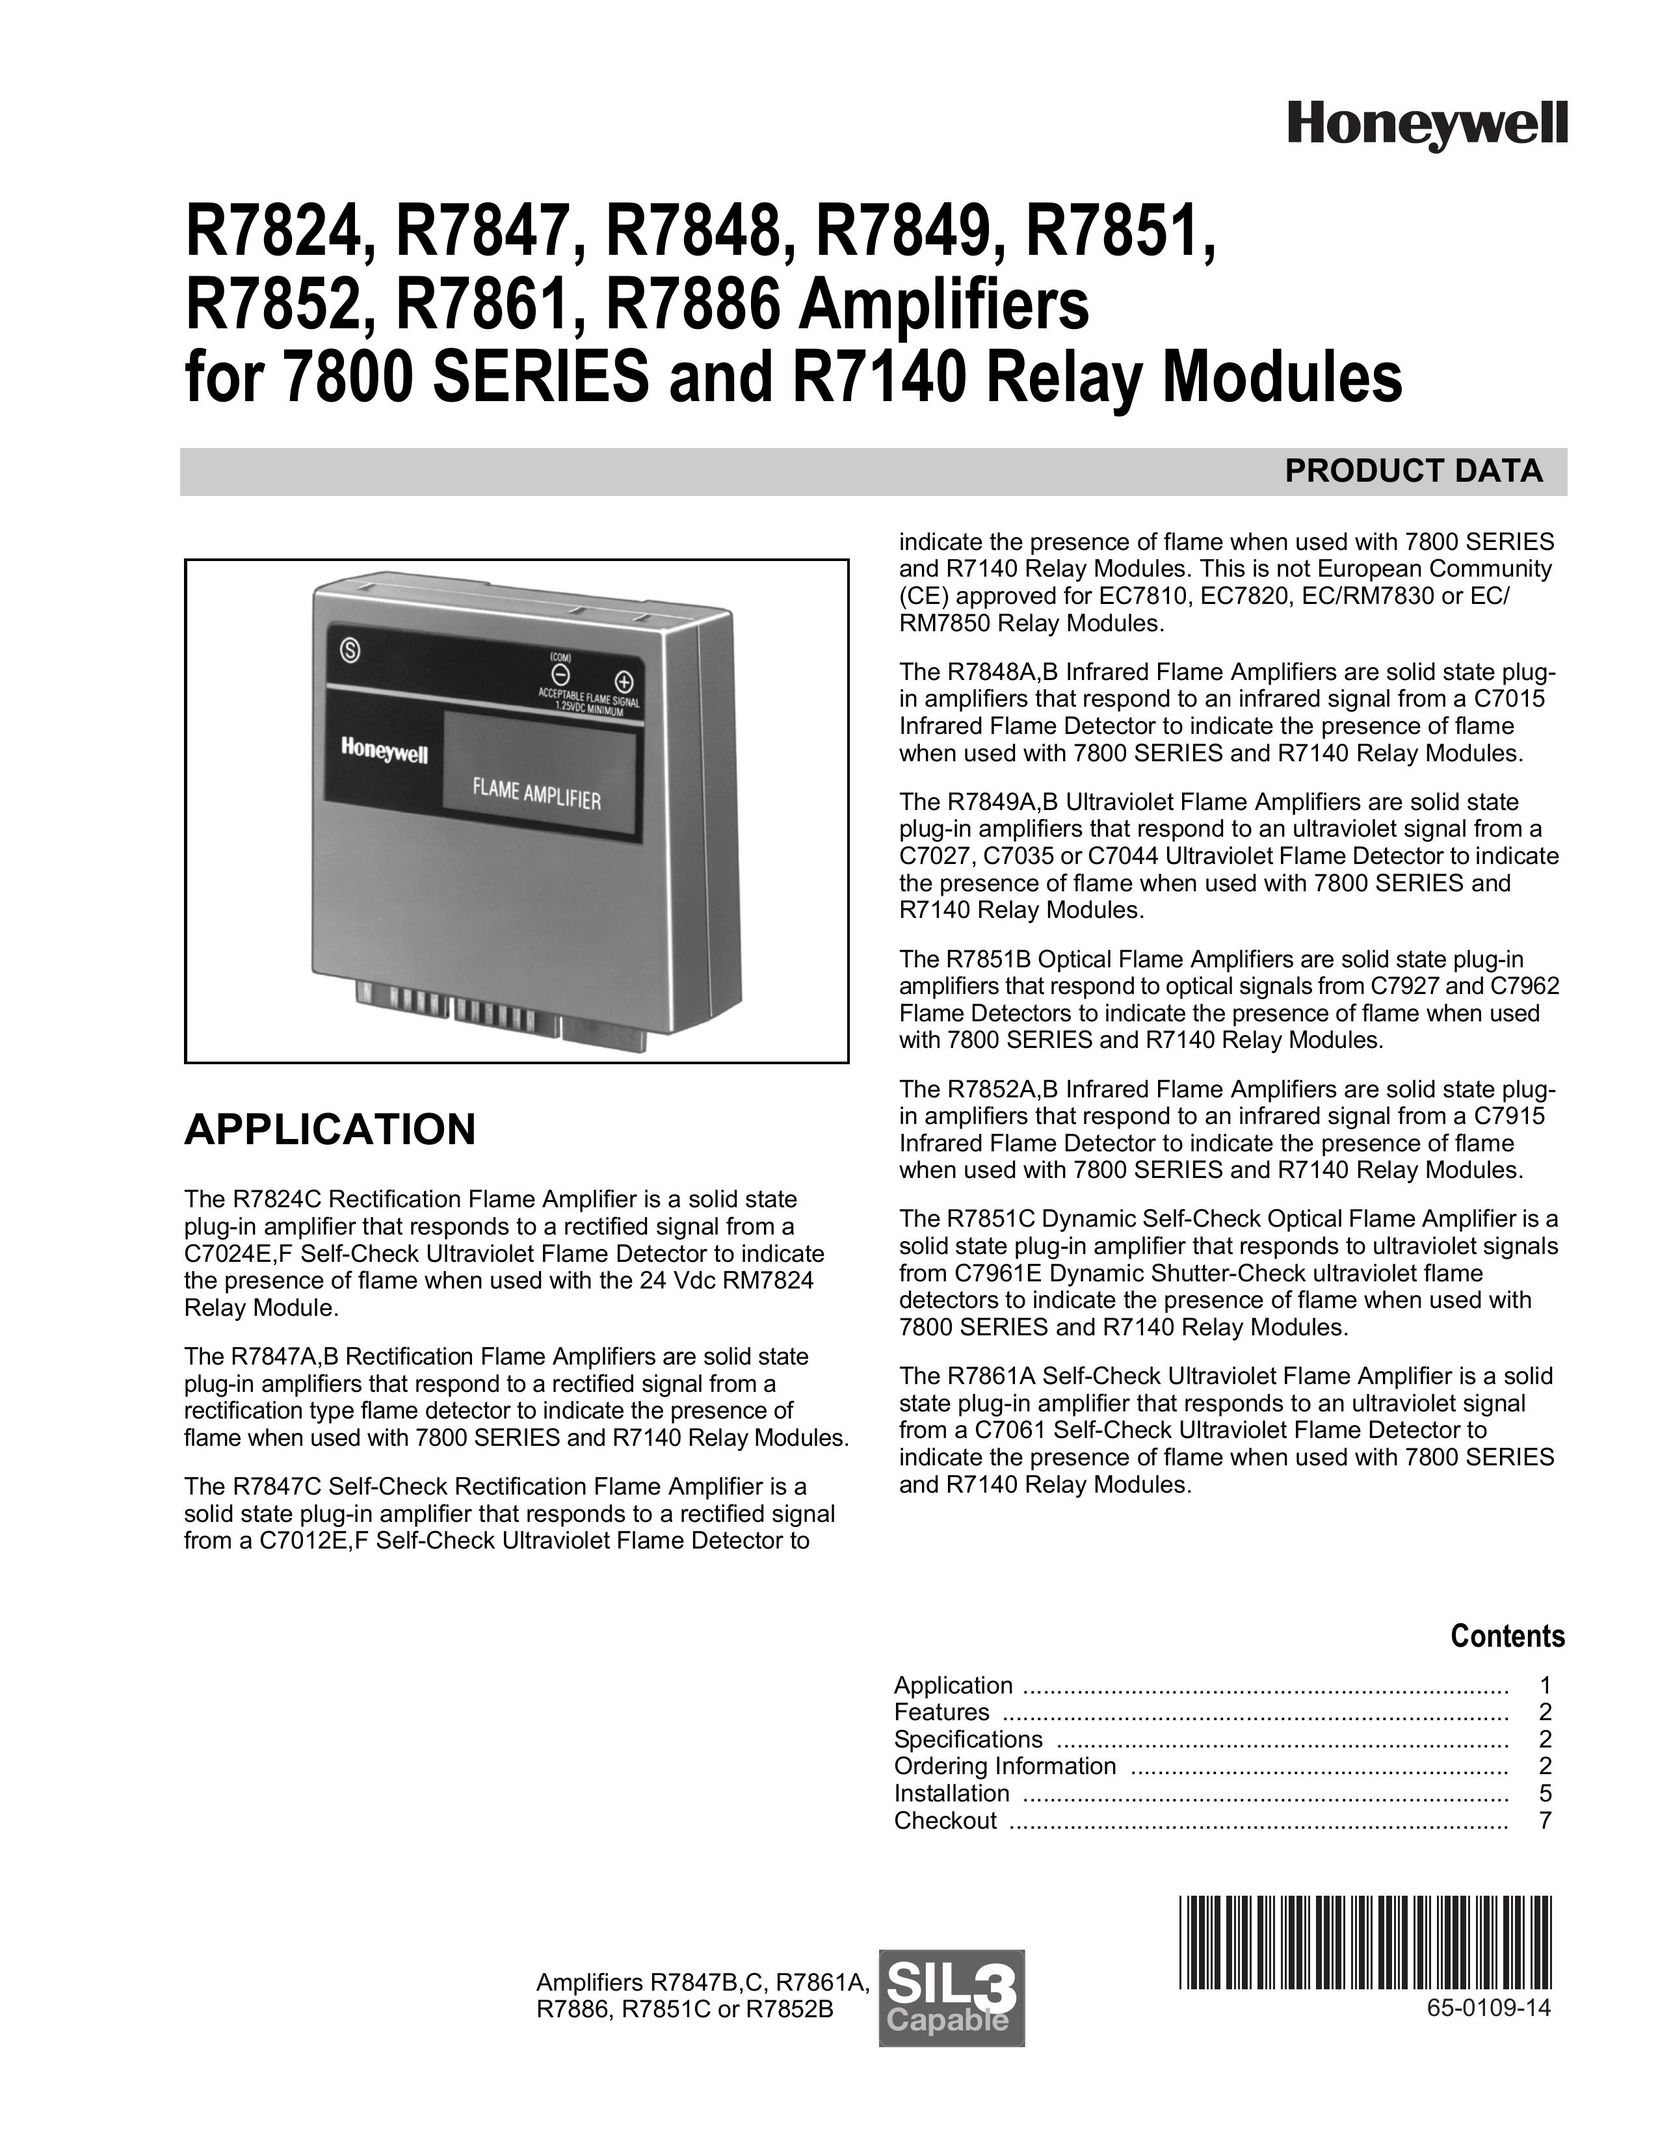 Honeywell R7824 Car Amplifier User Manual